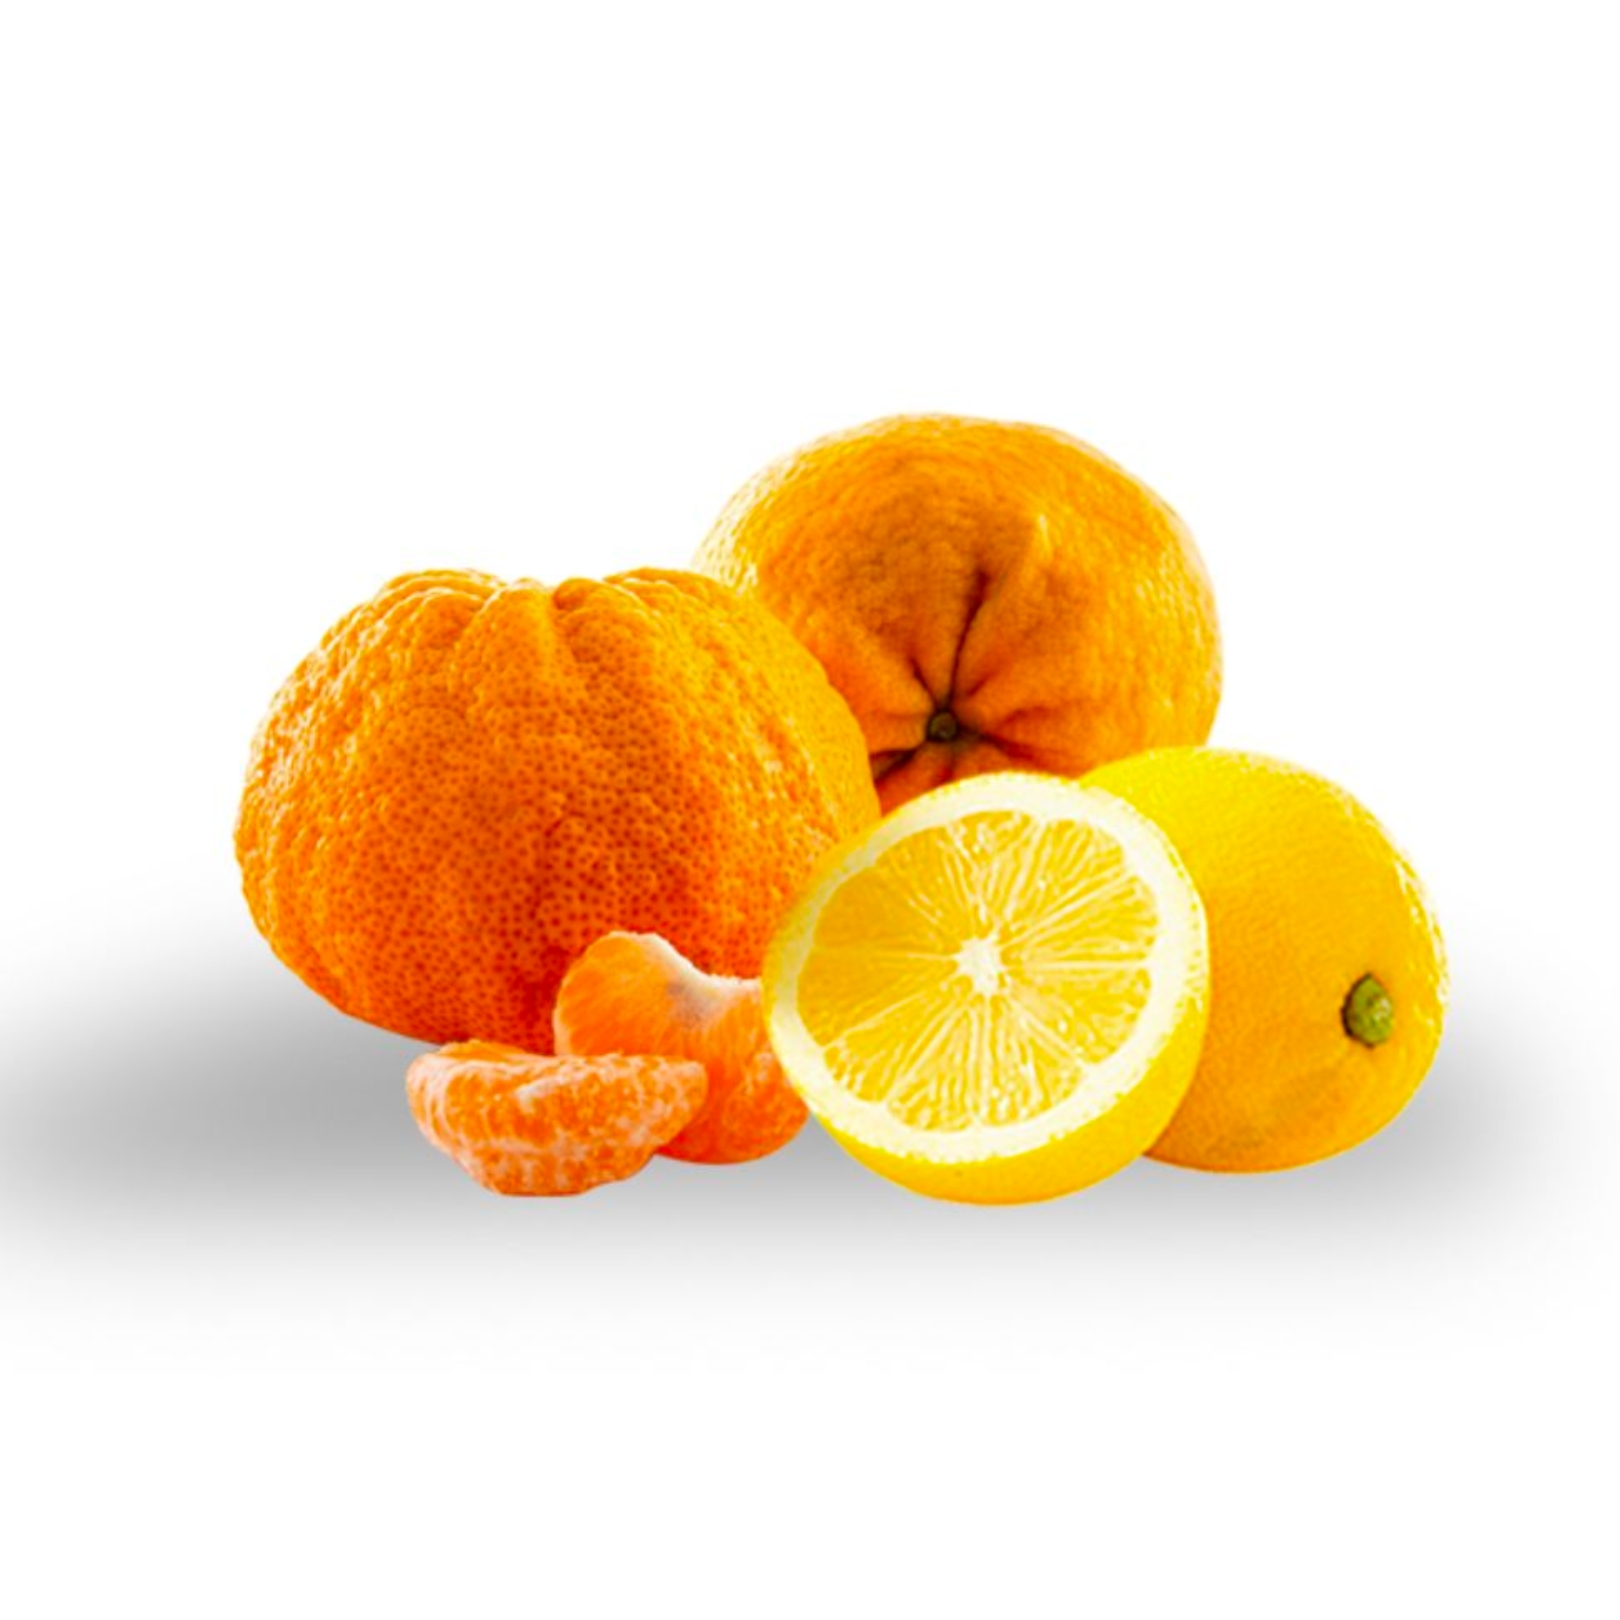 Buy Ugli Fruit Lemon Online NZ